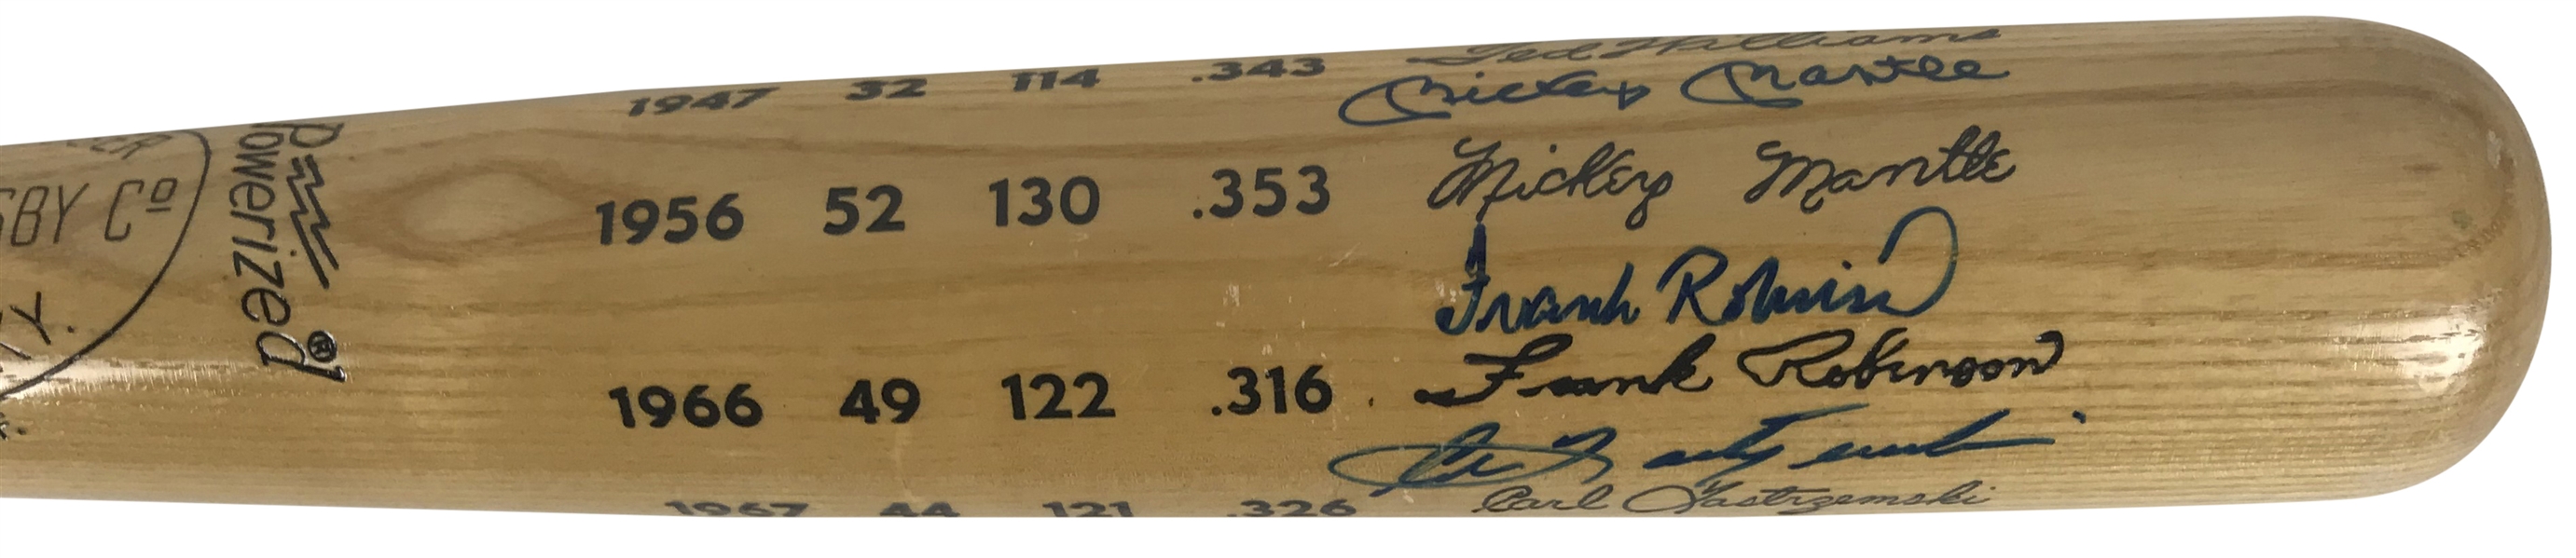 Triple Crown Winners Signed Baseball Bat w/ Mantle, Williams & Others! (Beckett/BAS Guaranteed)